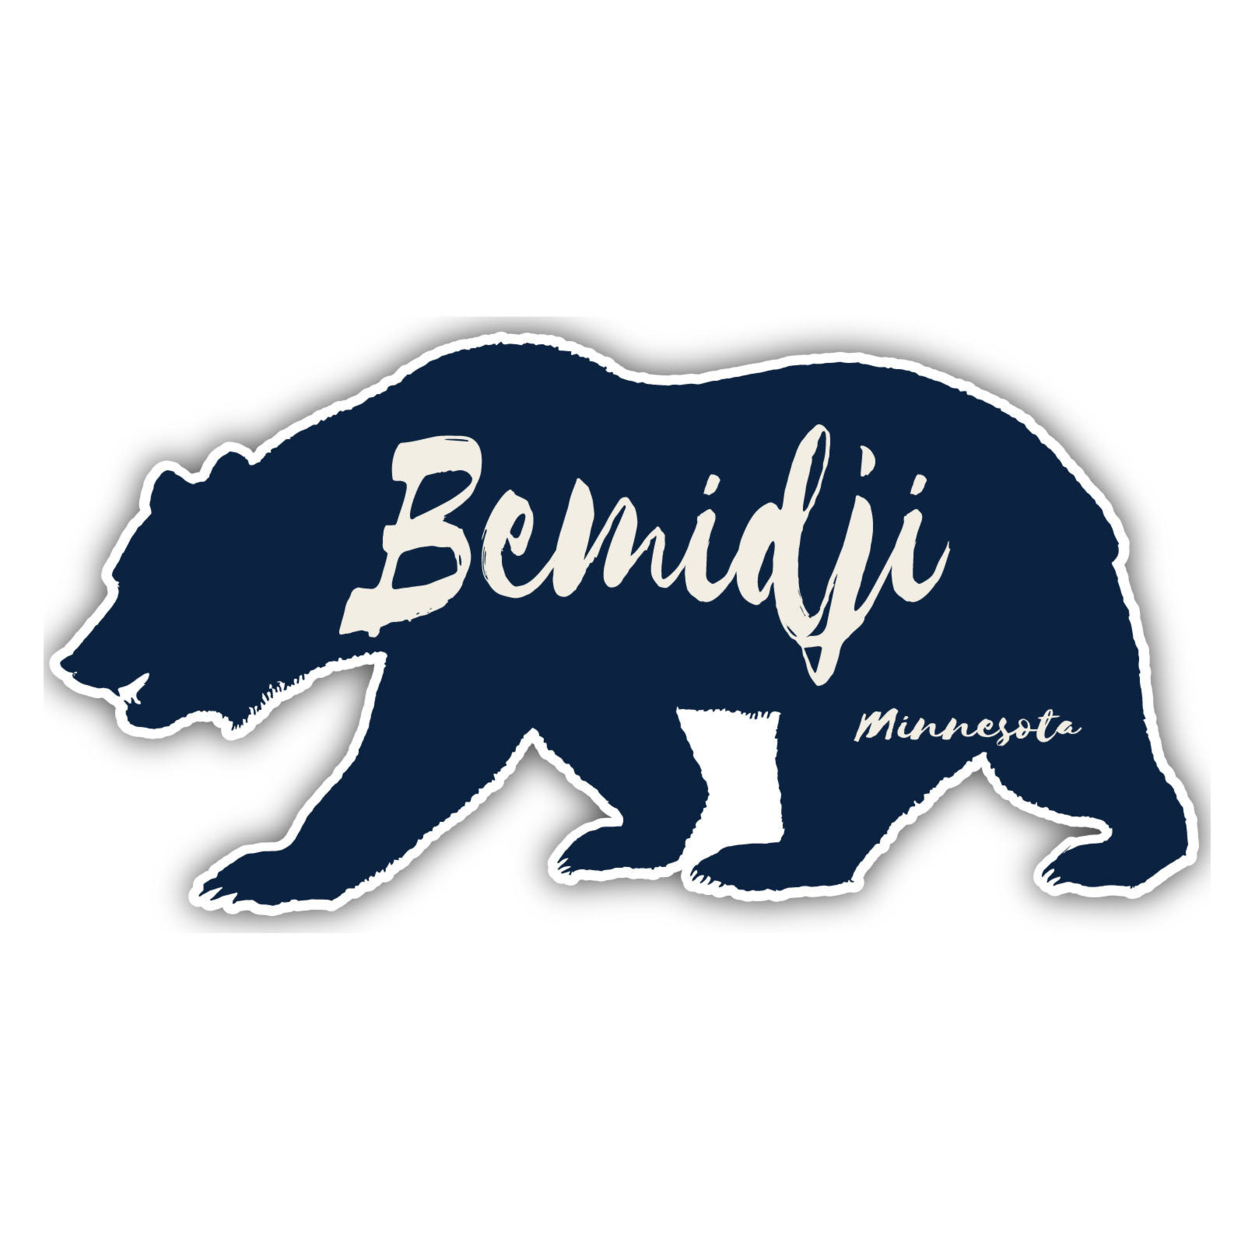 Bemidji Minnesota Souvenir Decorative Stickers (Choose Theme And Size) - 4-Pack, 4-Inch, Adventures Awaits